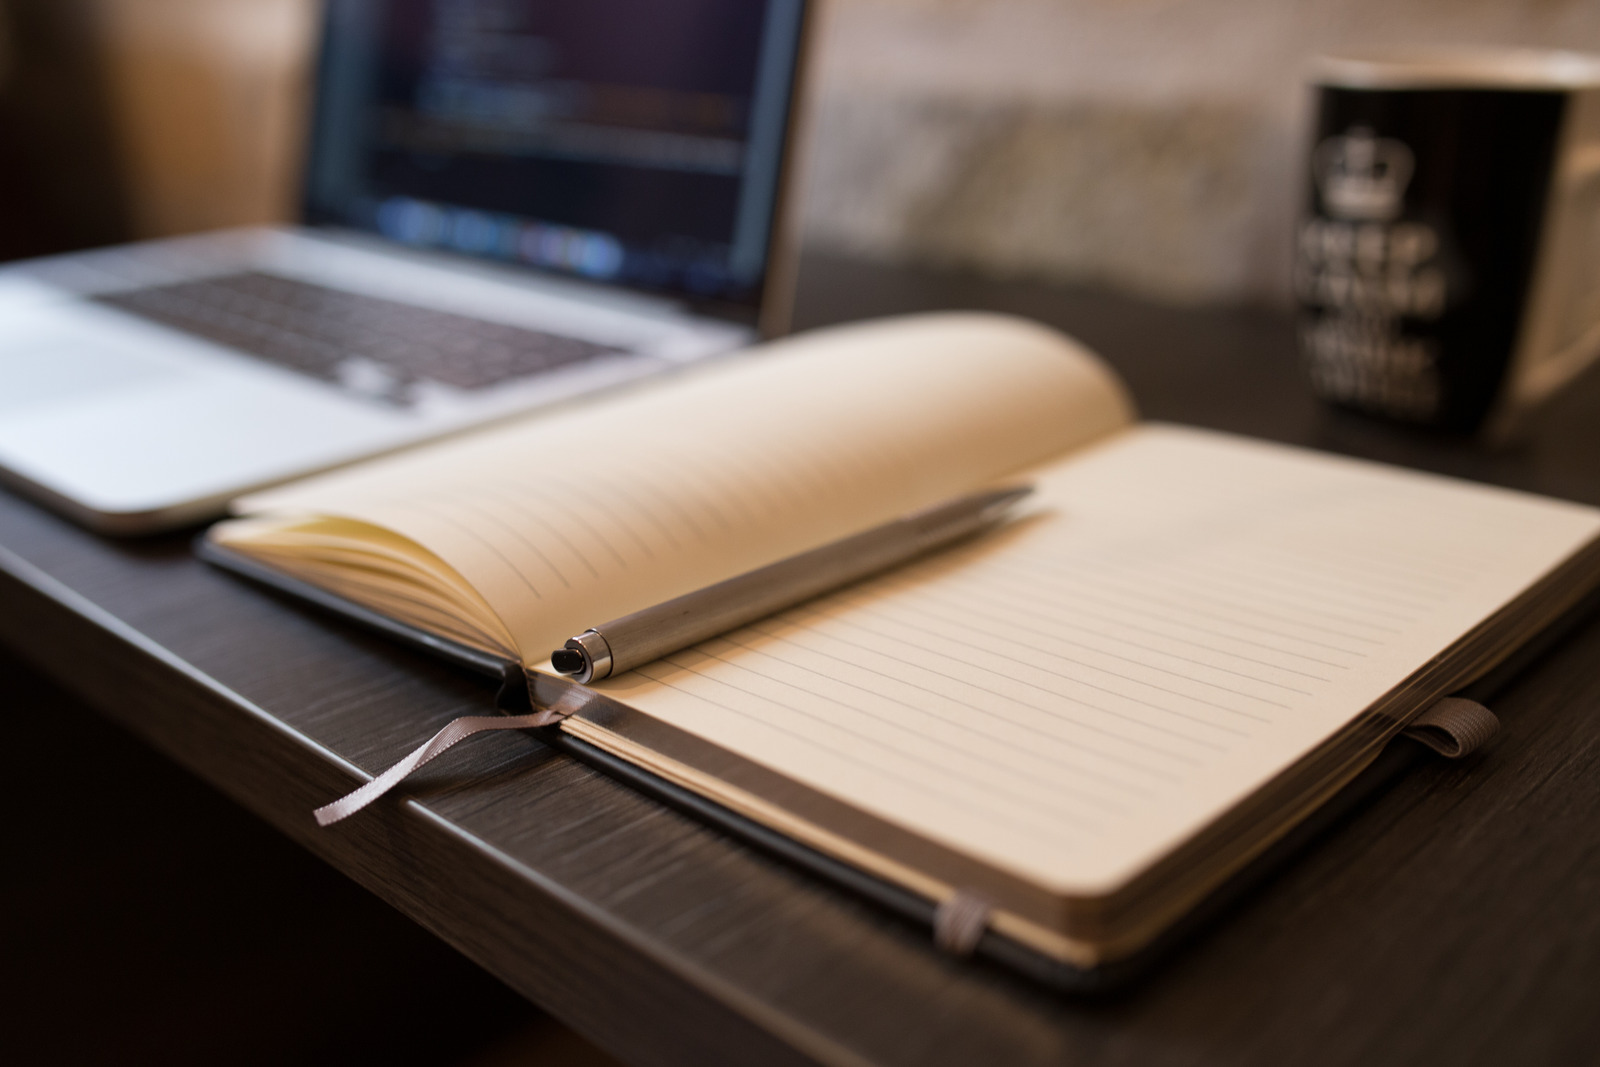 open notebook with pen alongside a computer